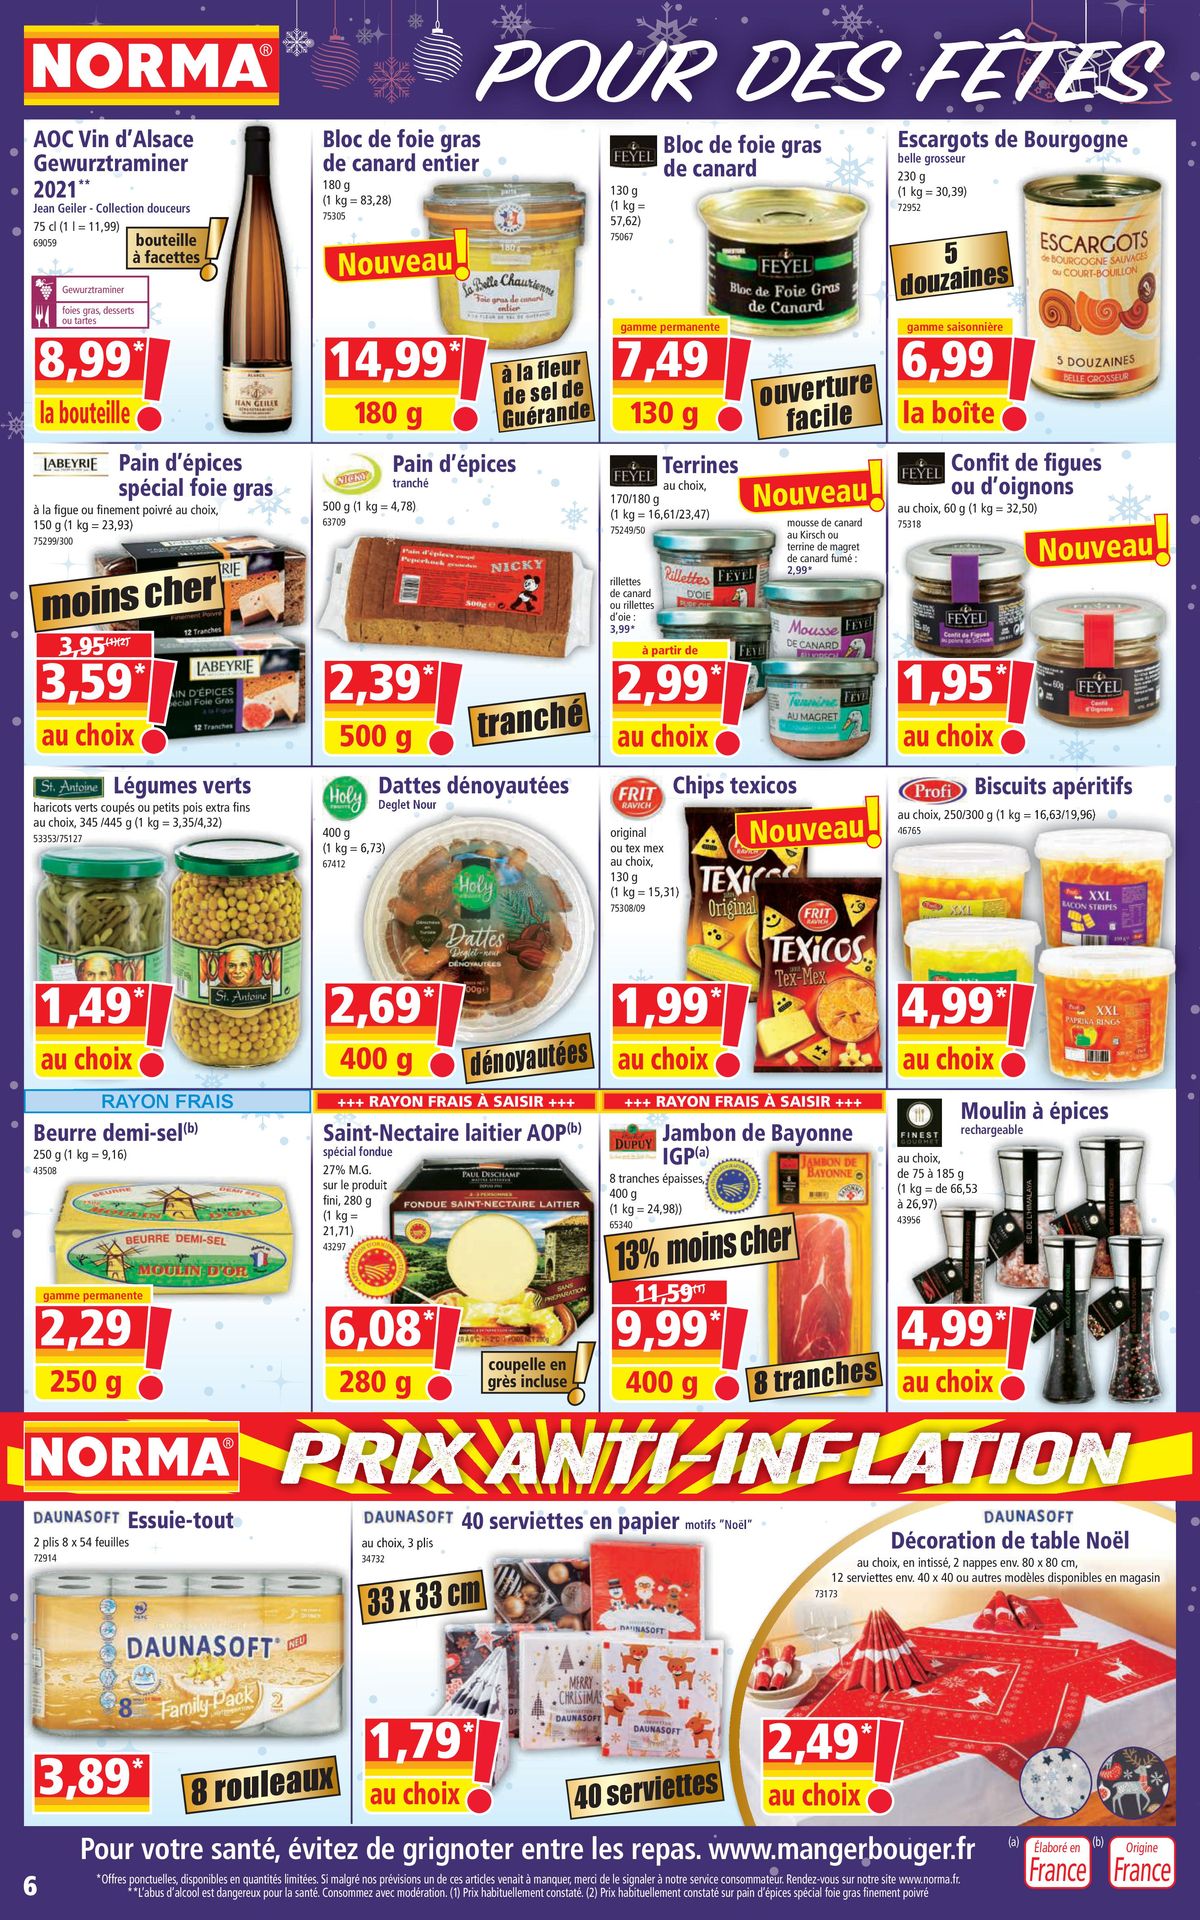 Catalogue Prix anti-inflation, page 00006